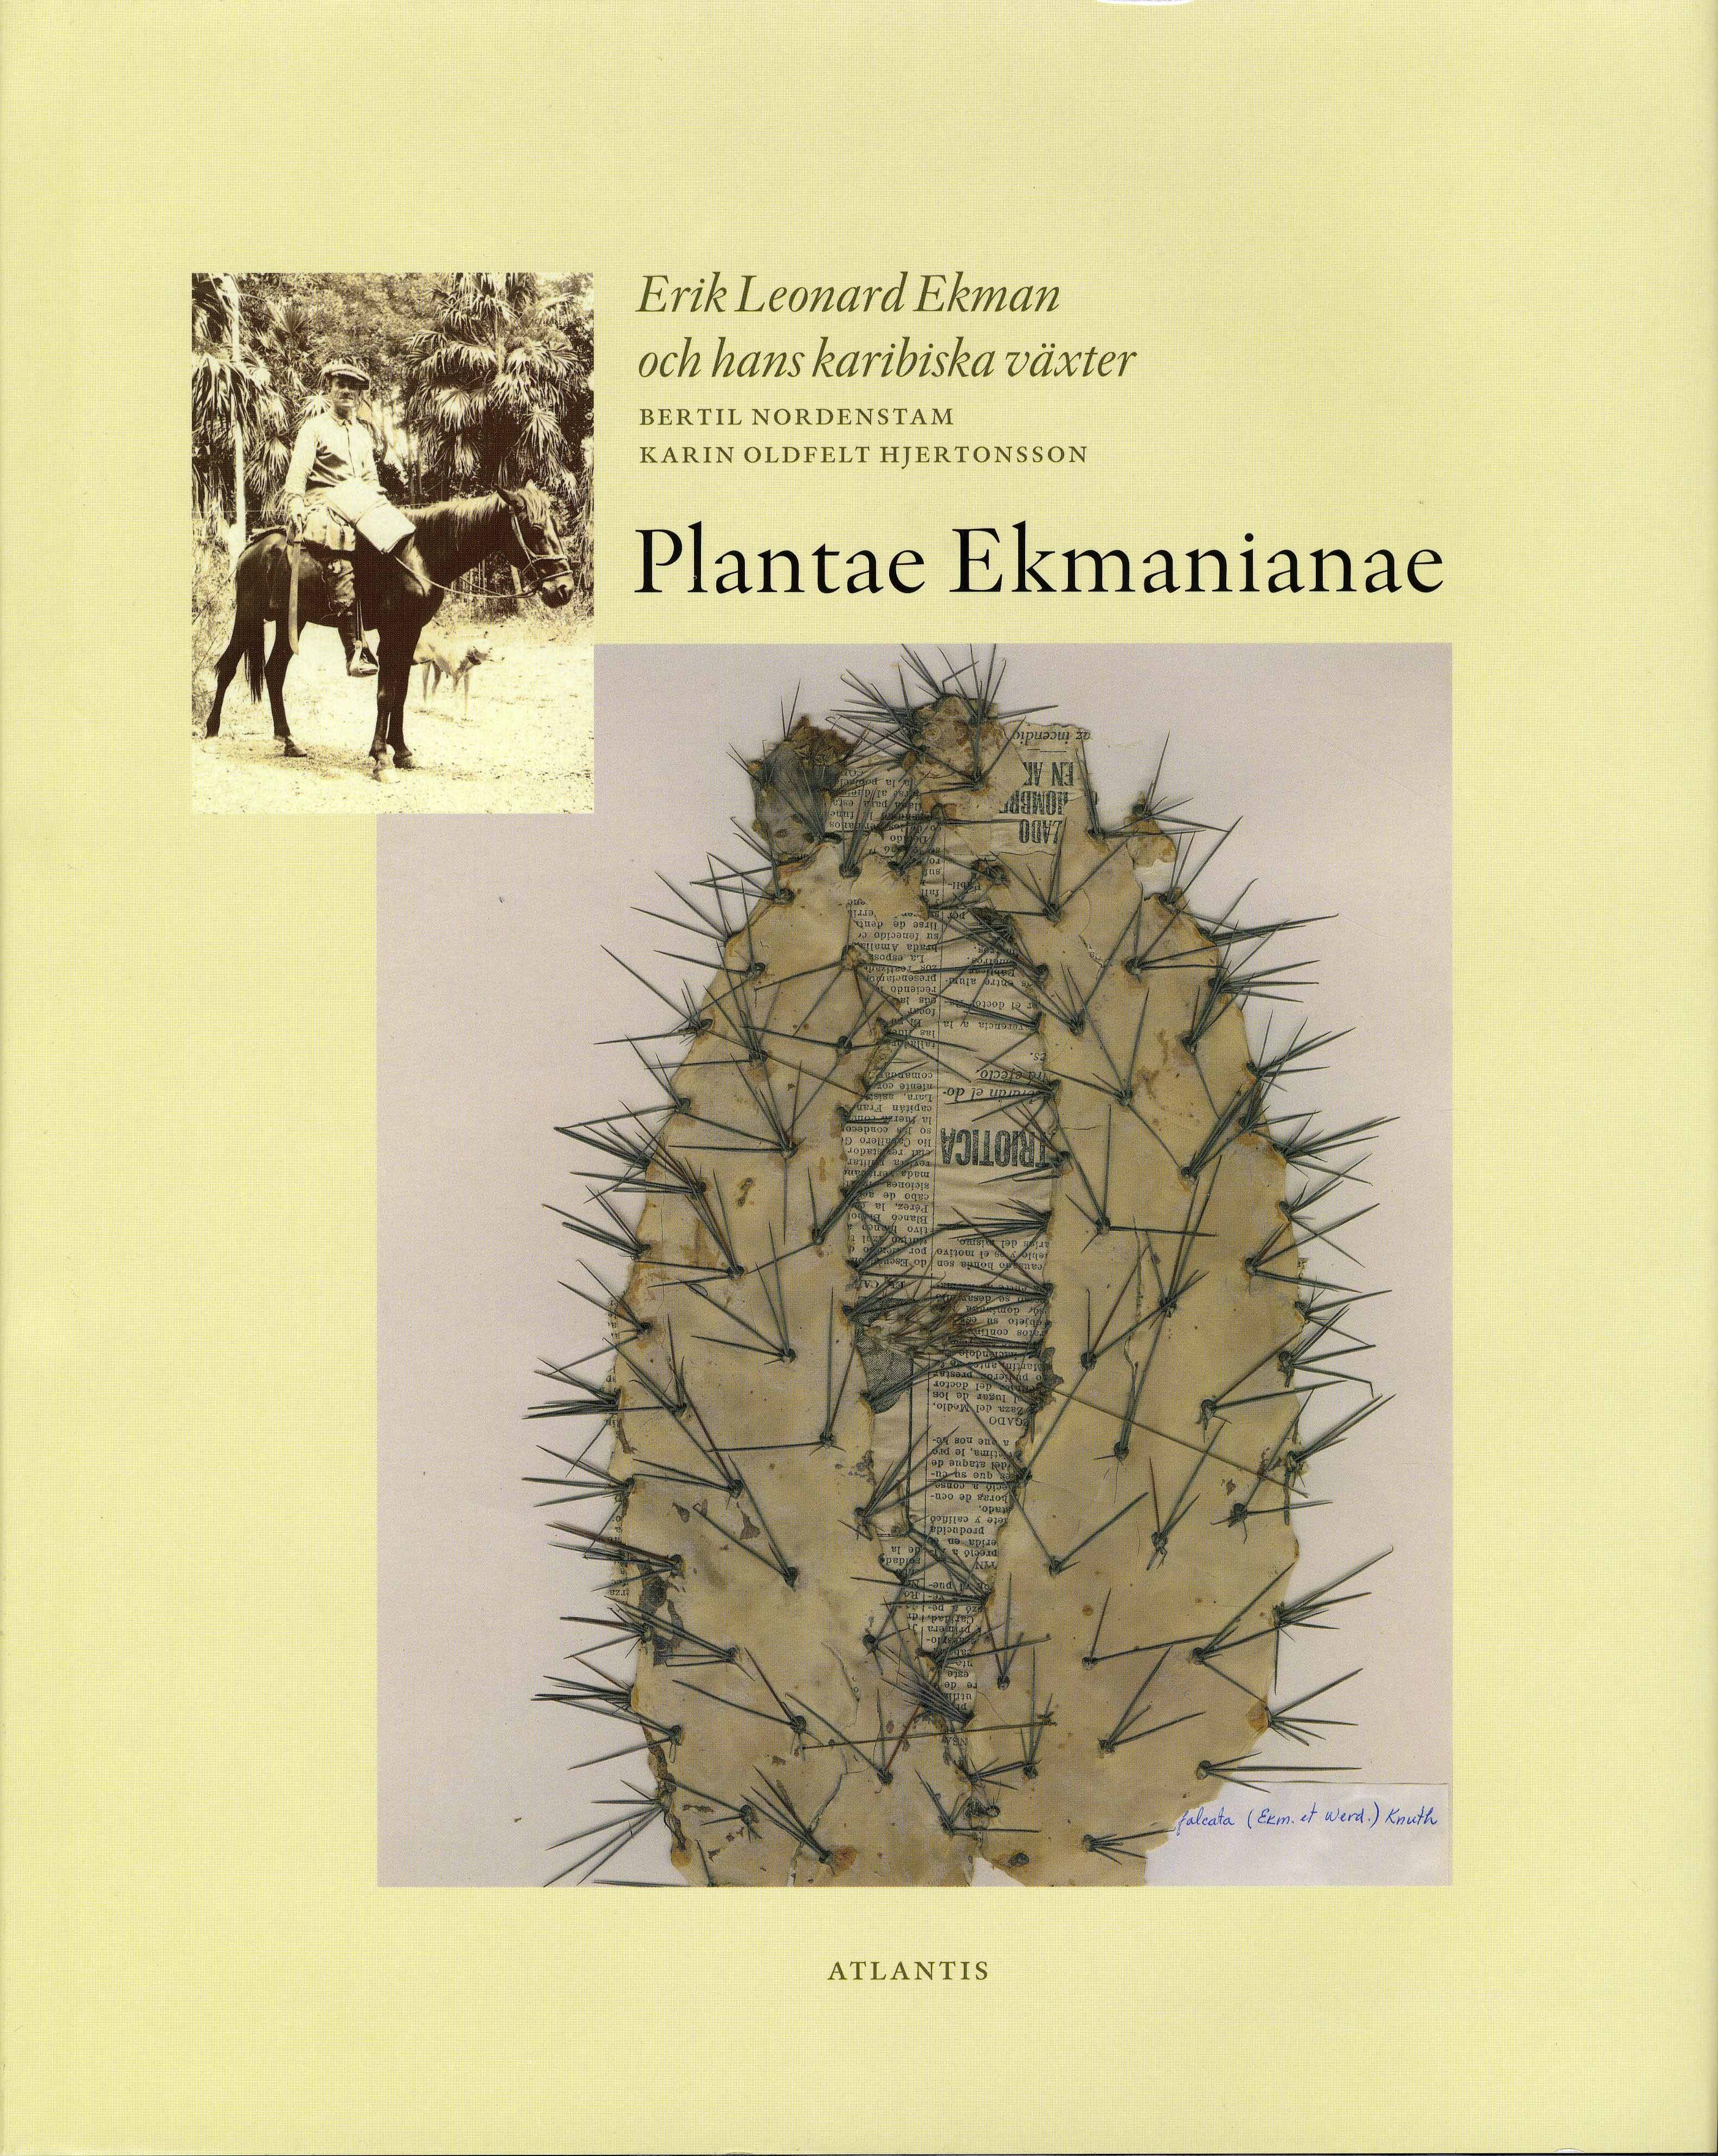 Plantae Ekamanianae : en bok om Erik Leonard Ekman och hans karibiska växter